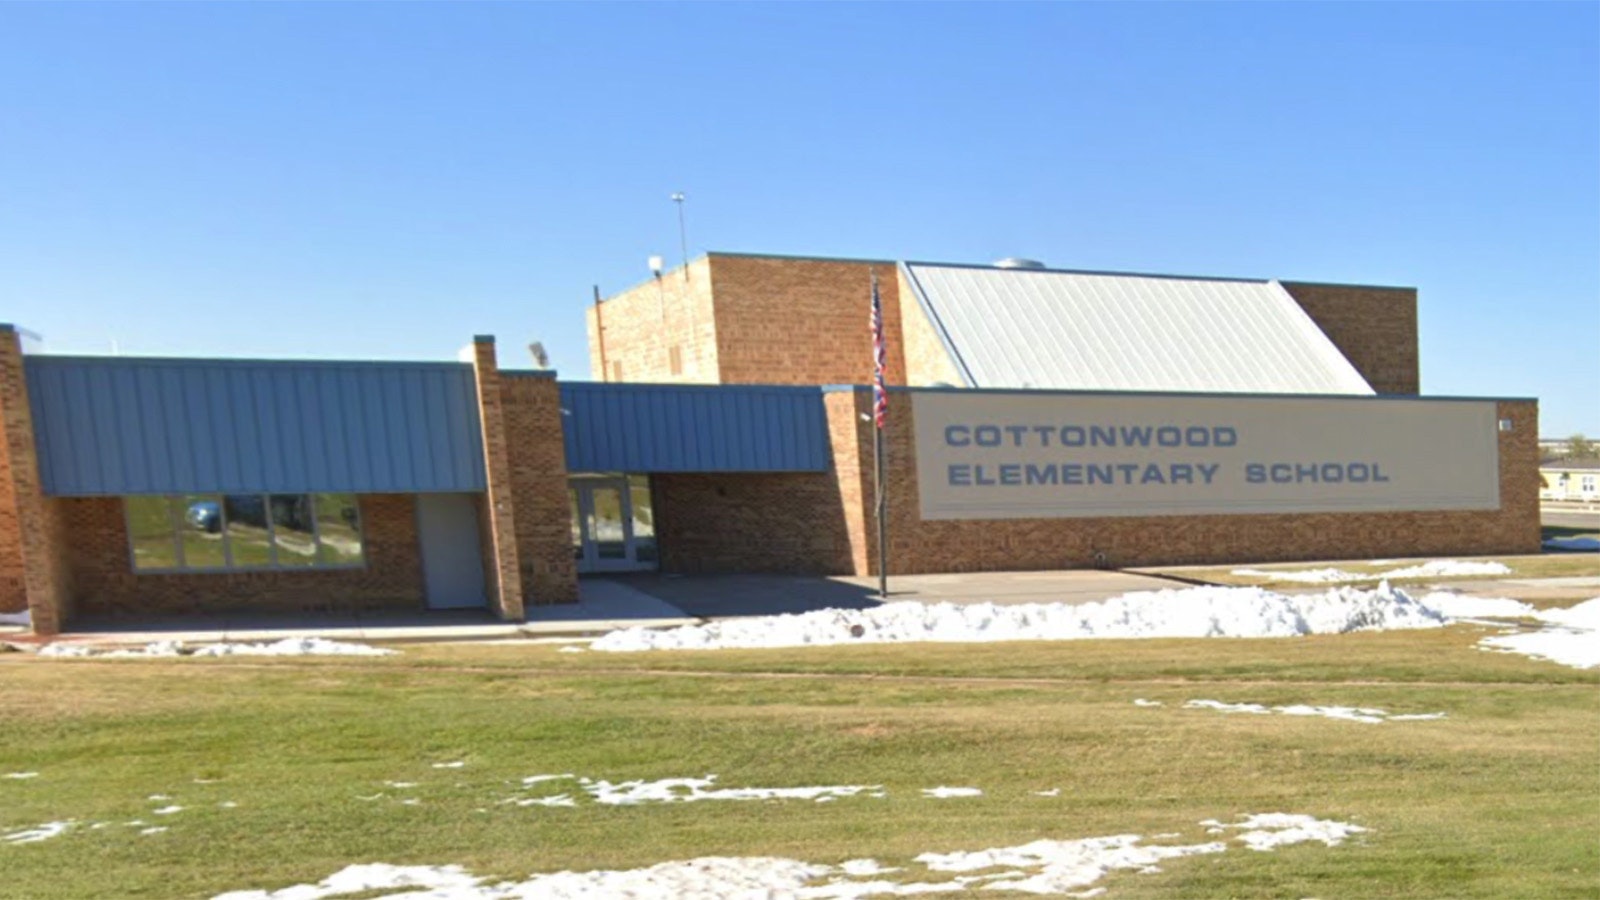 Cottonwood Elementary School in Wright, Wyoming.